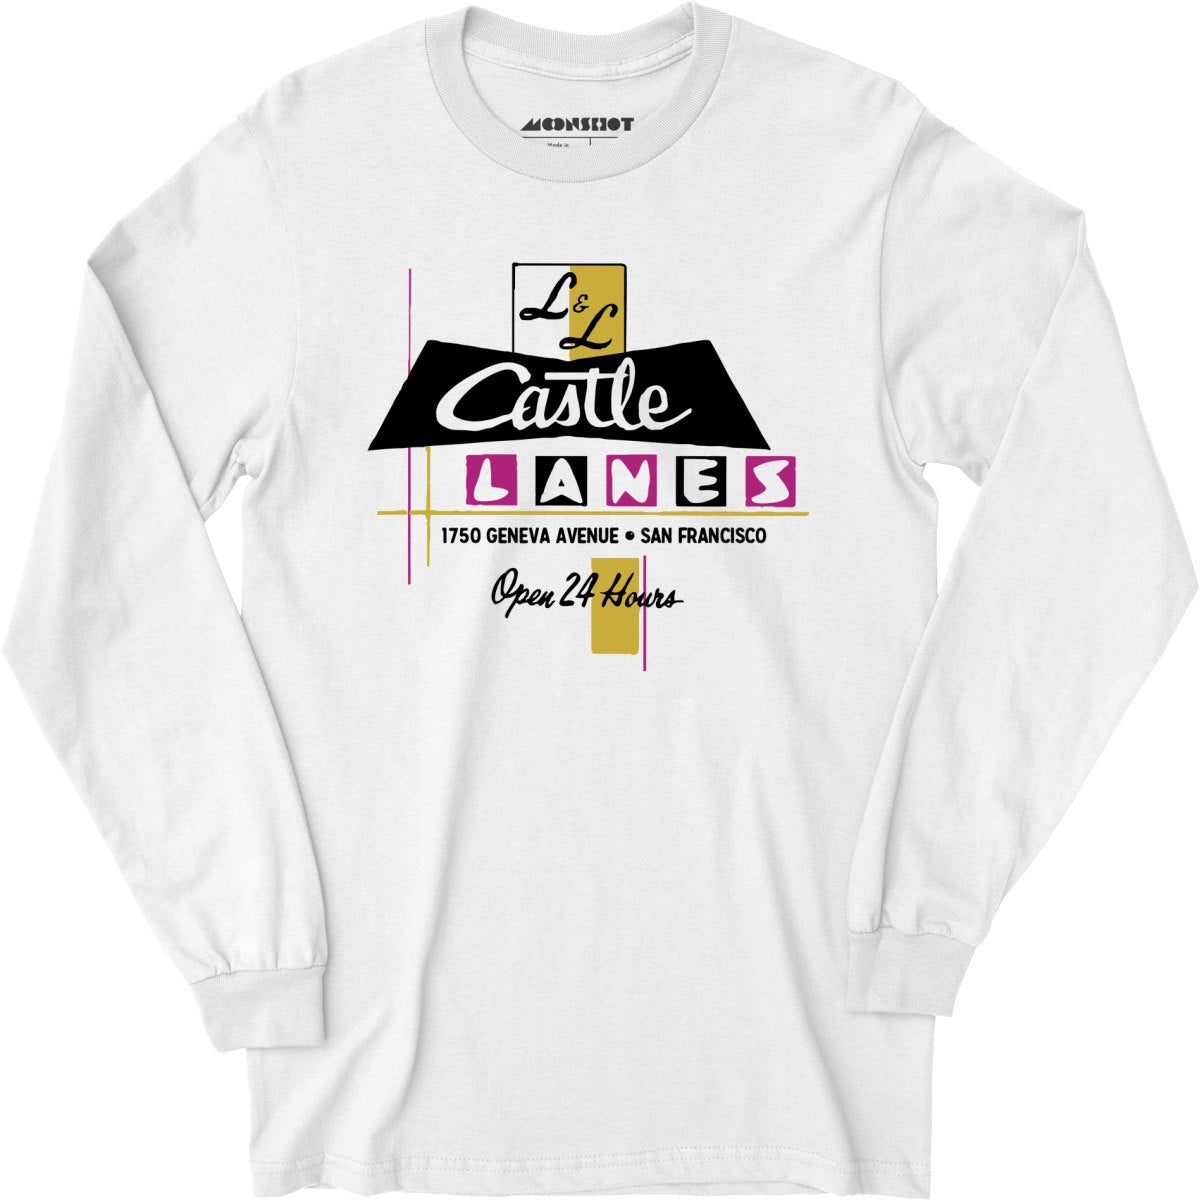 L & L Castle Lanes - San Francisco, CA - Vintage Bowling Alley - Long Sleeve T-Shirt